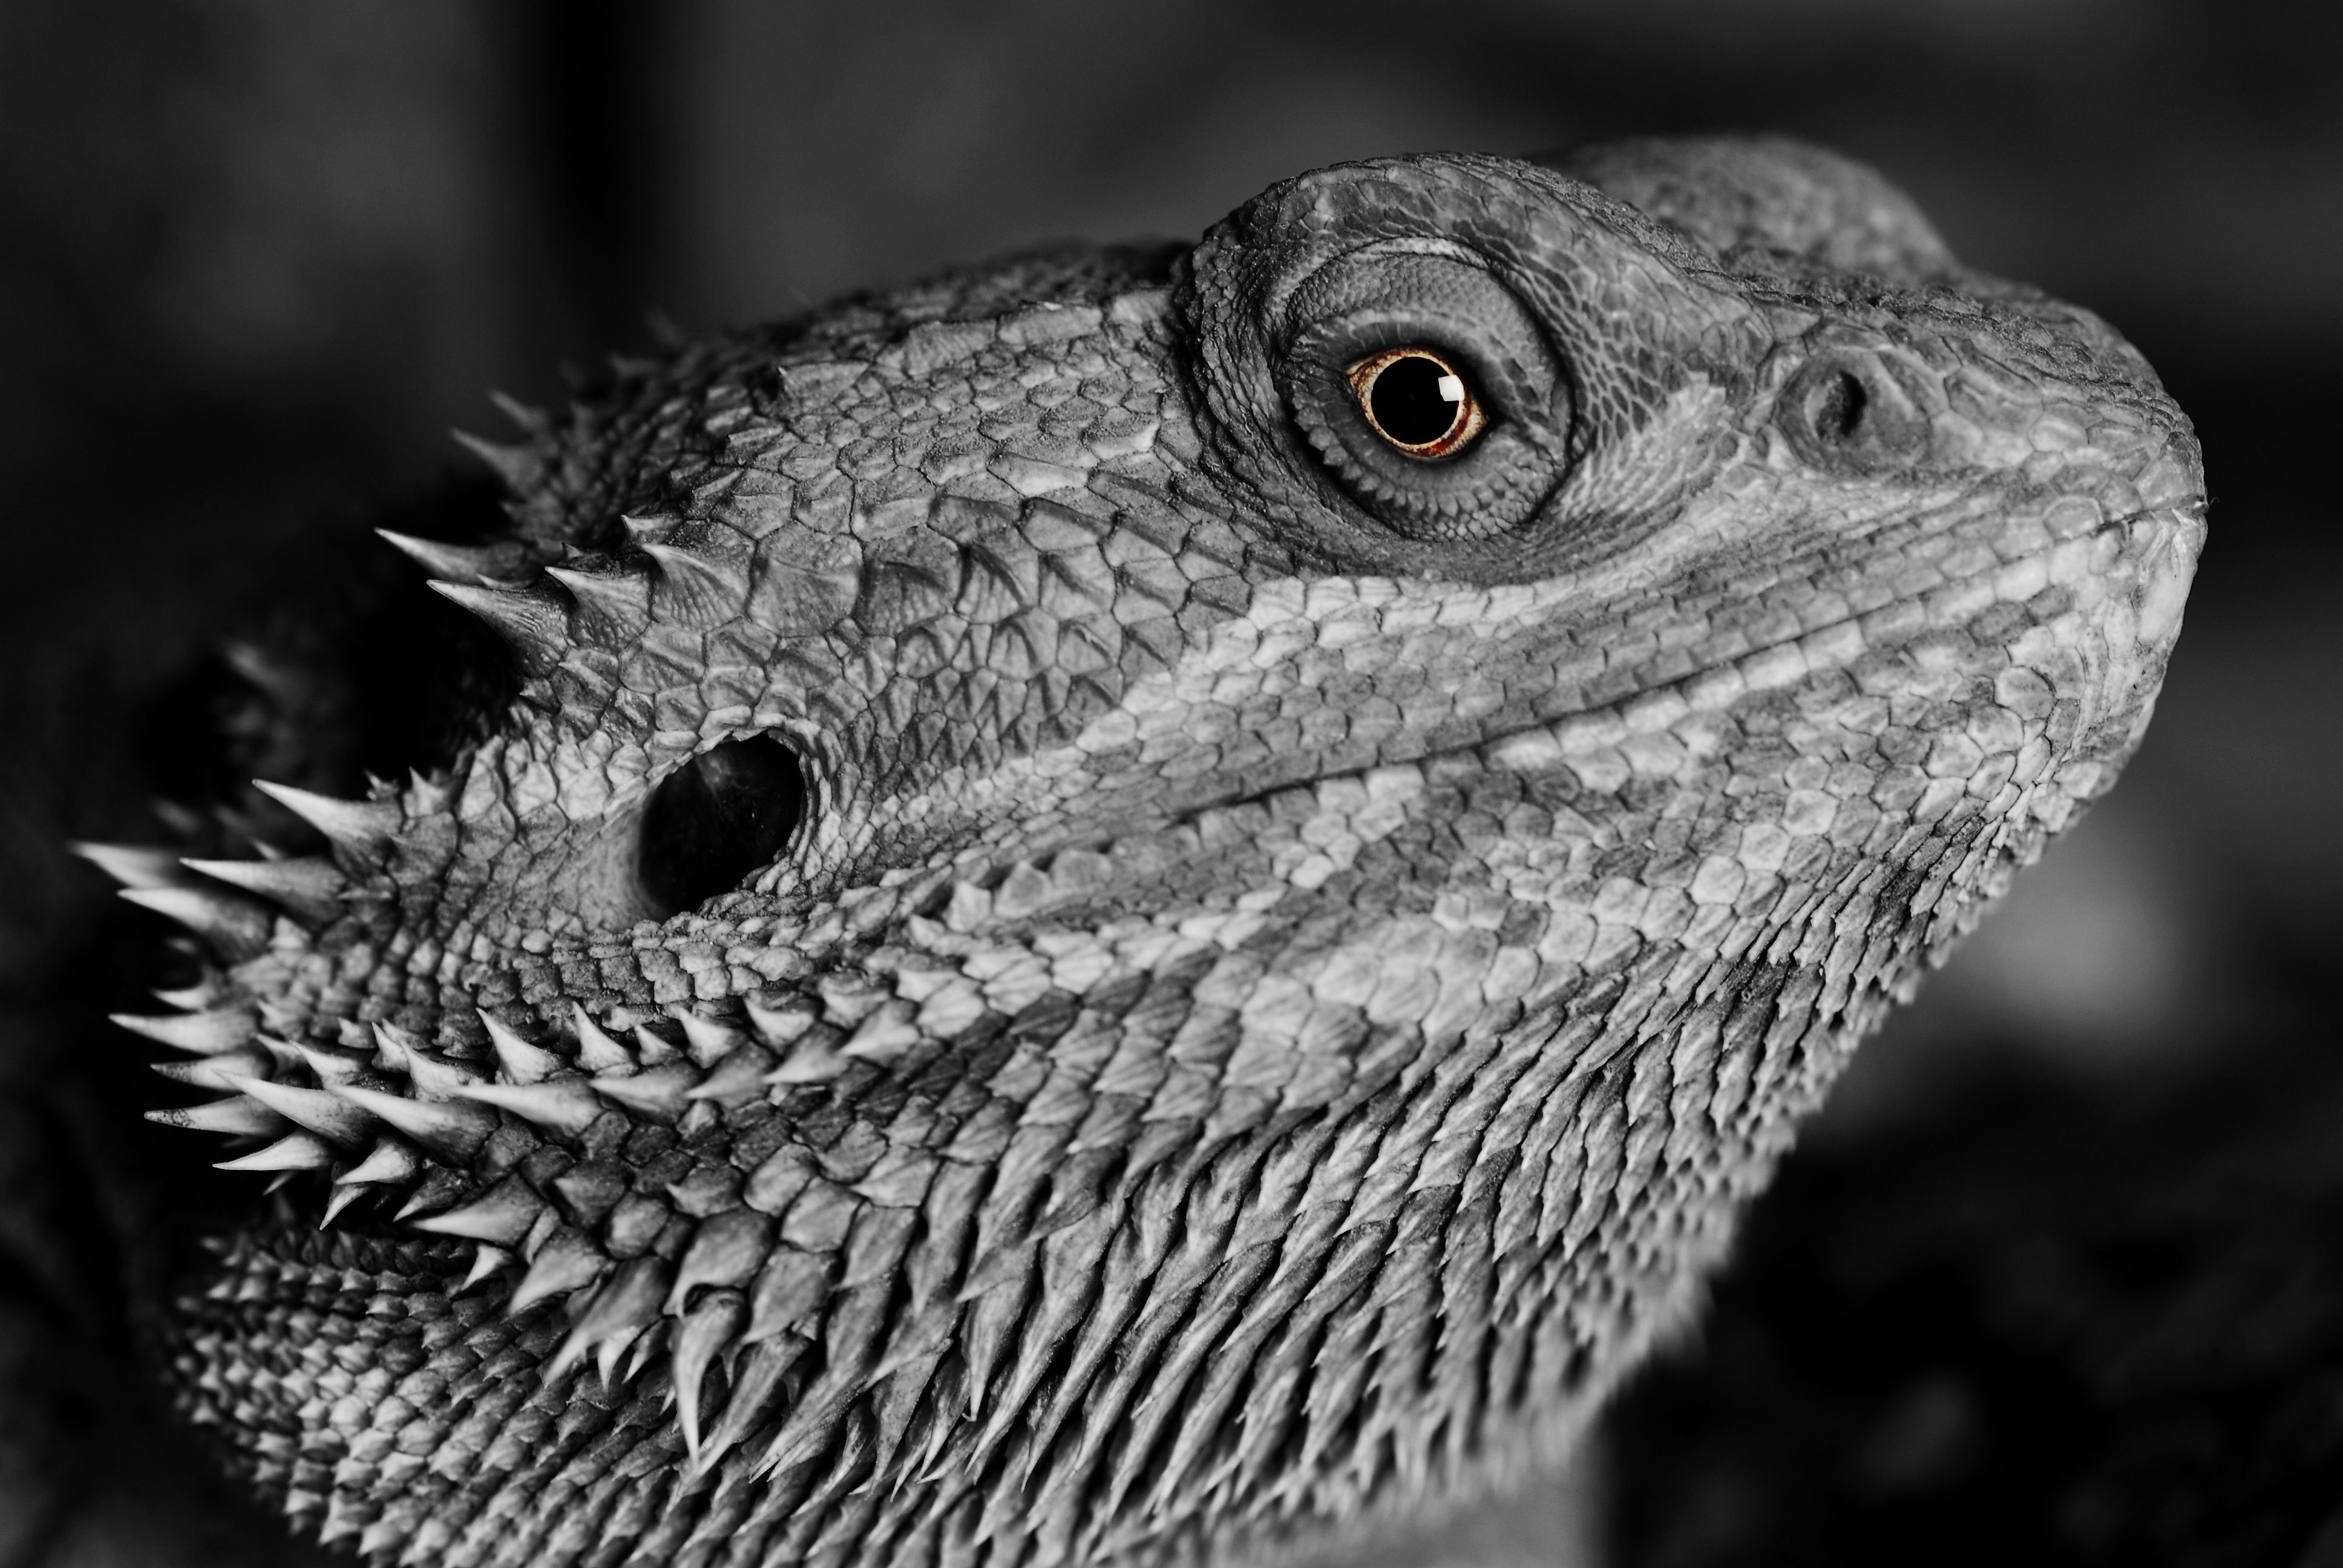 Lizard Reptile Monochrome 4k, HD Animals, 4k Wallpaper, Image, Background, Photo and Picture